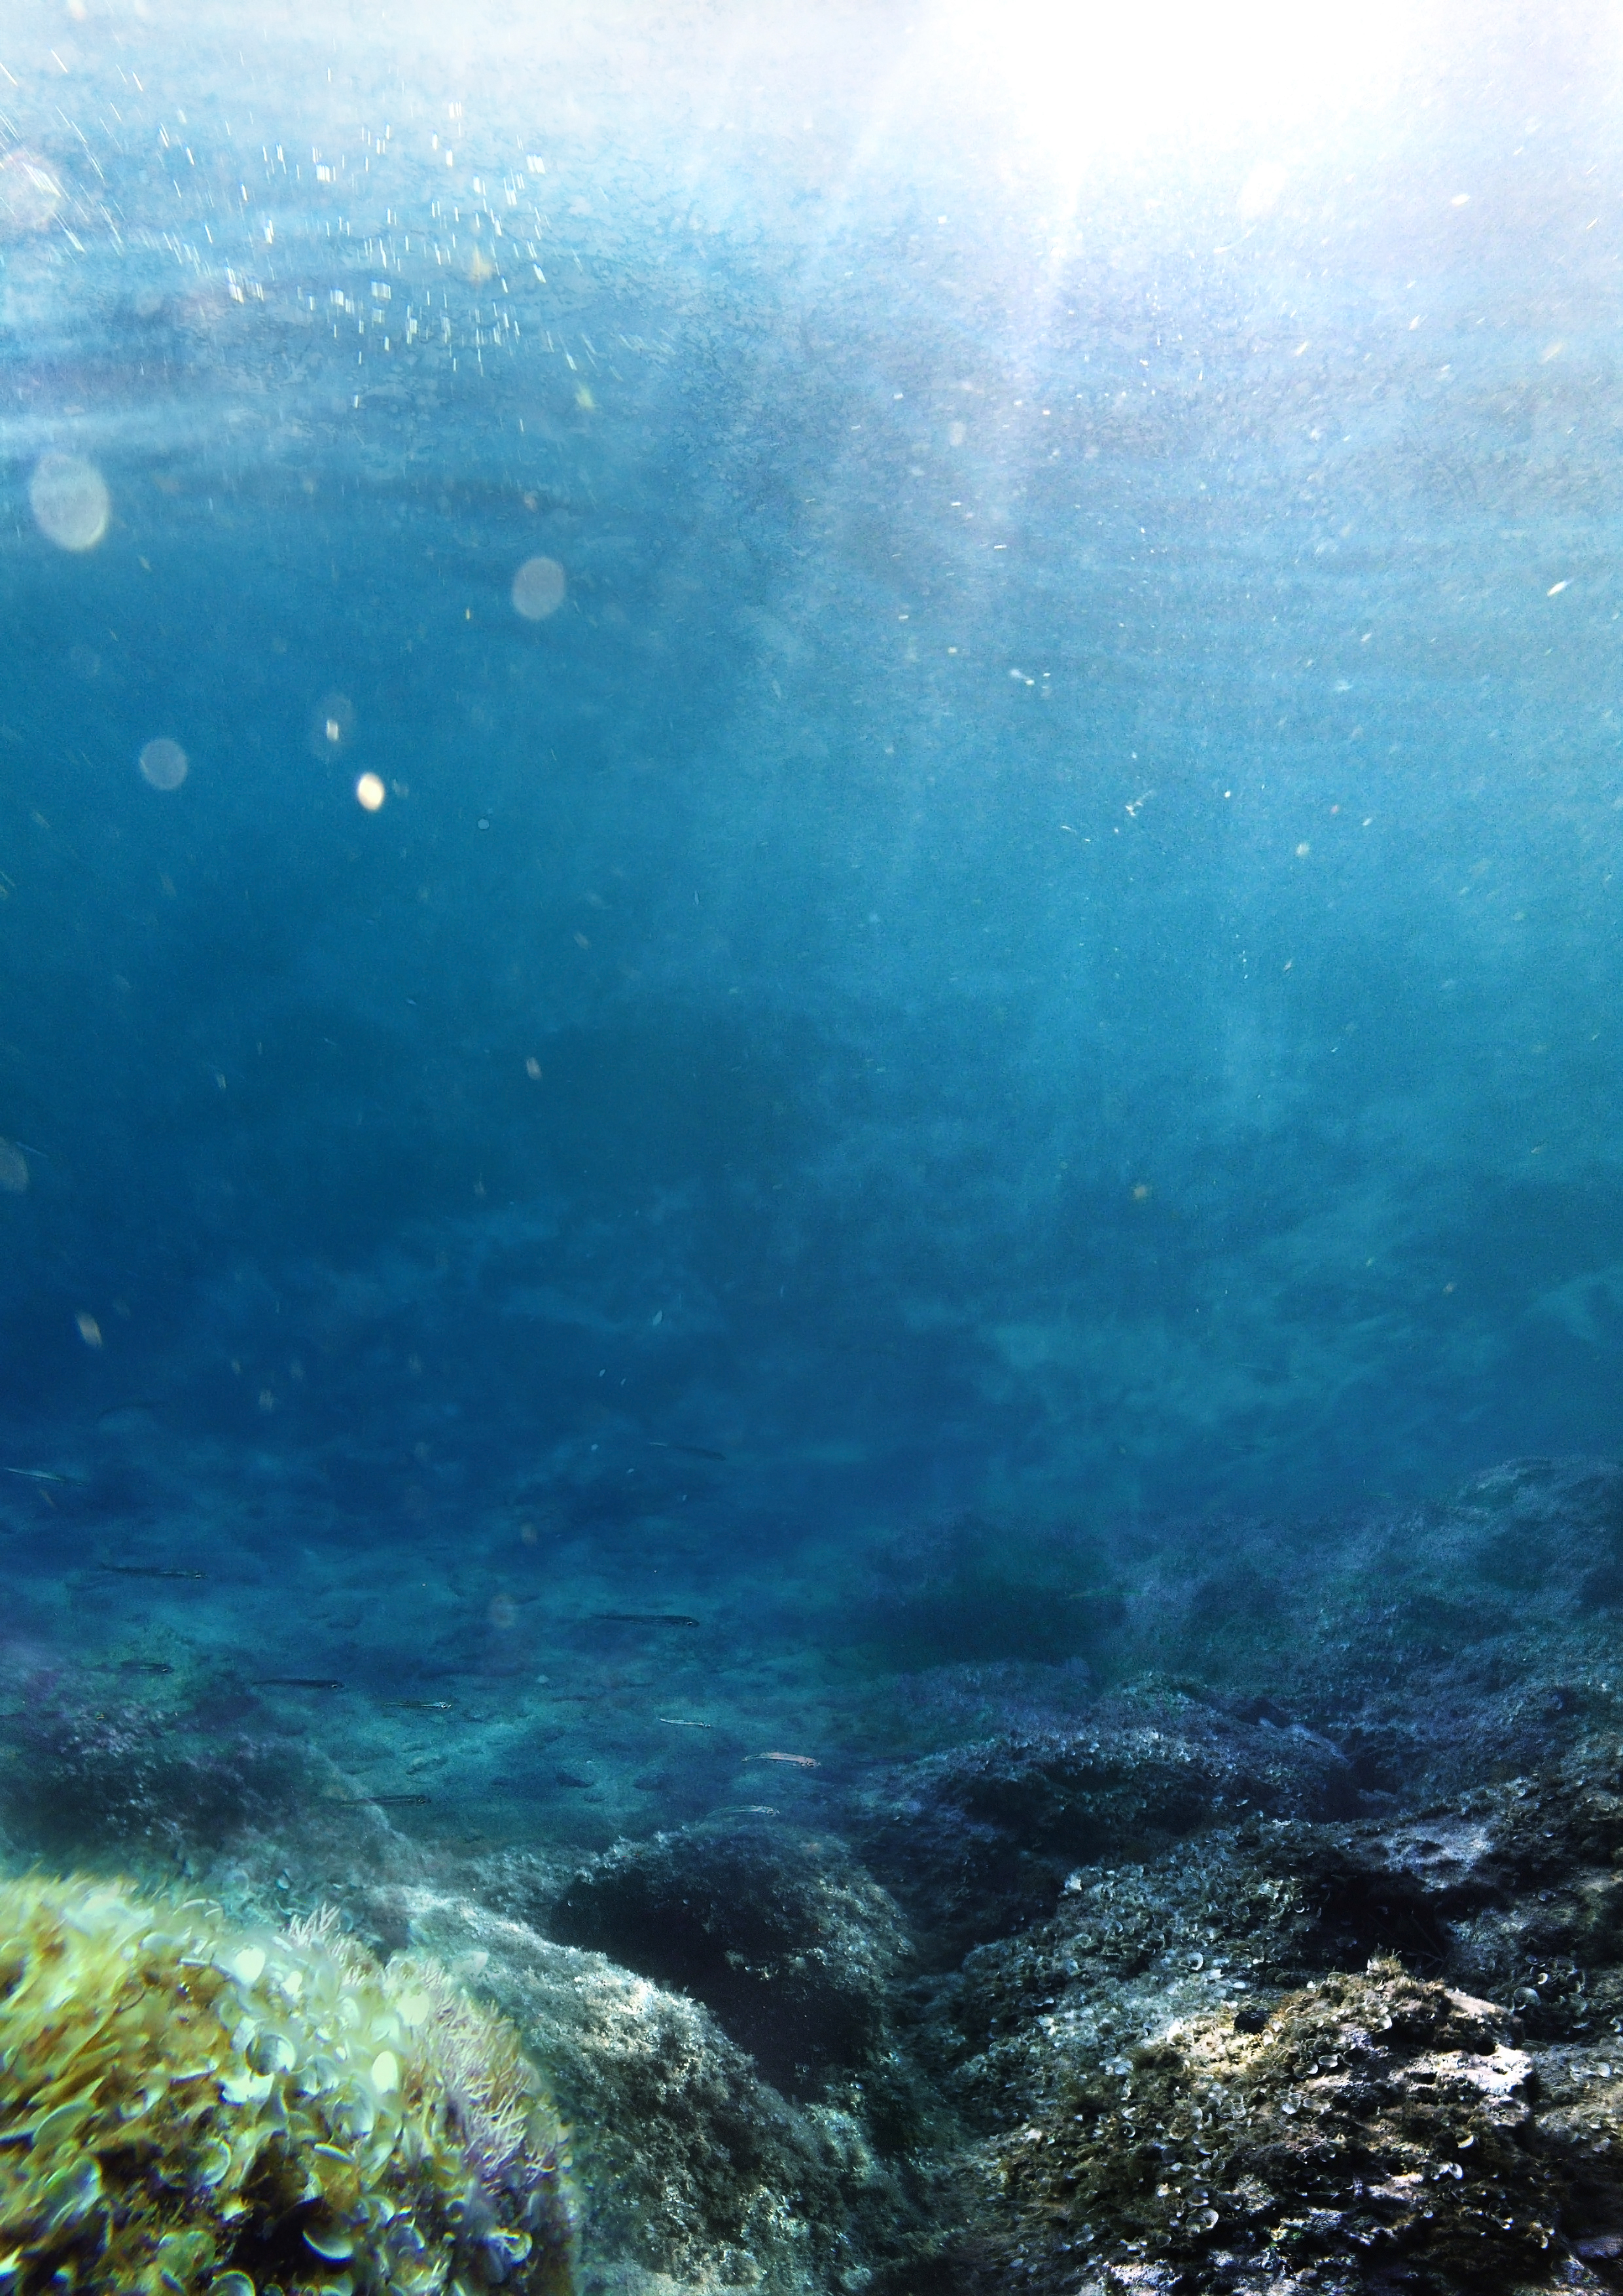 underwaterphotography | Explore underwaterphotography on DeviantArt